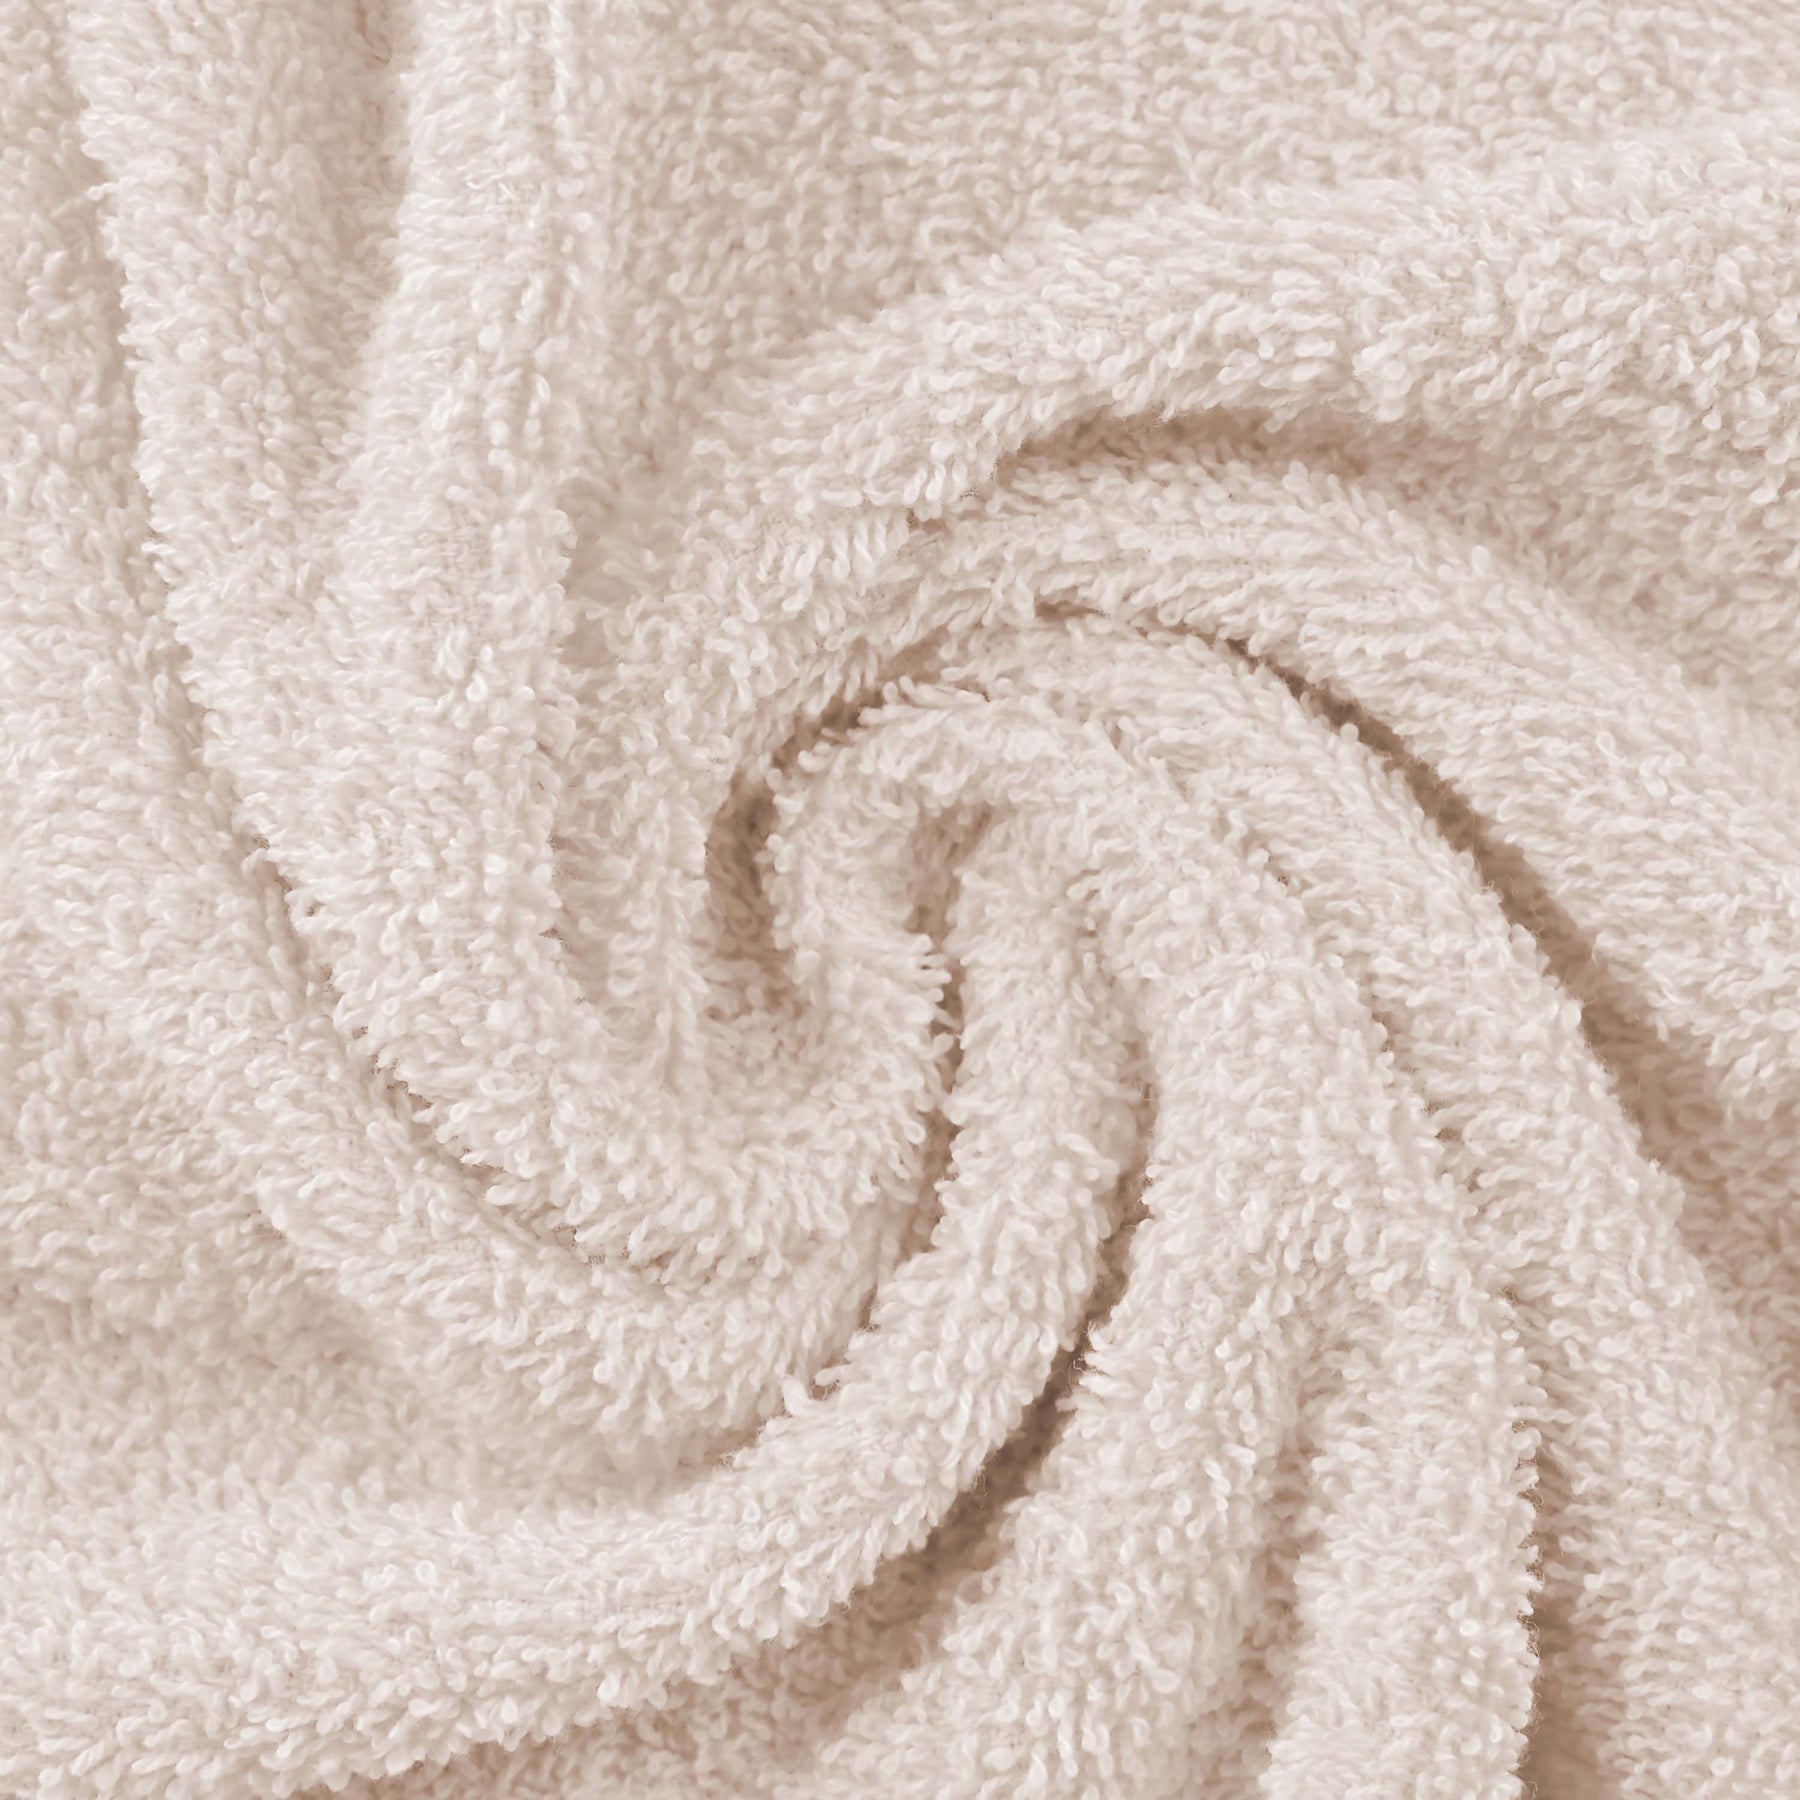 Eco-Friendly Ring Spun Cotton Towel Set - Ivory